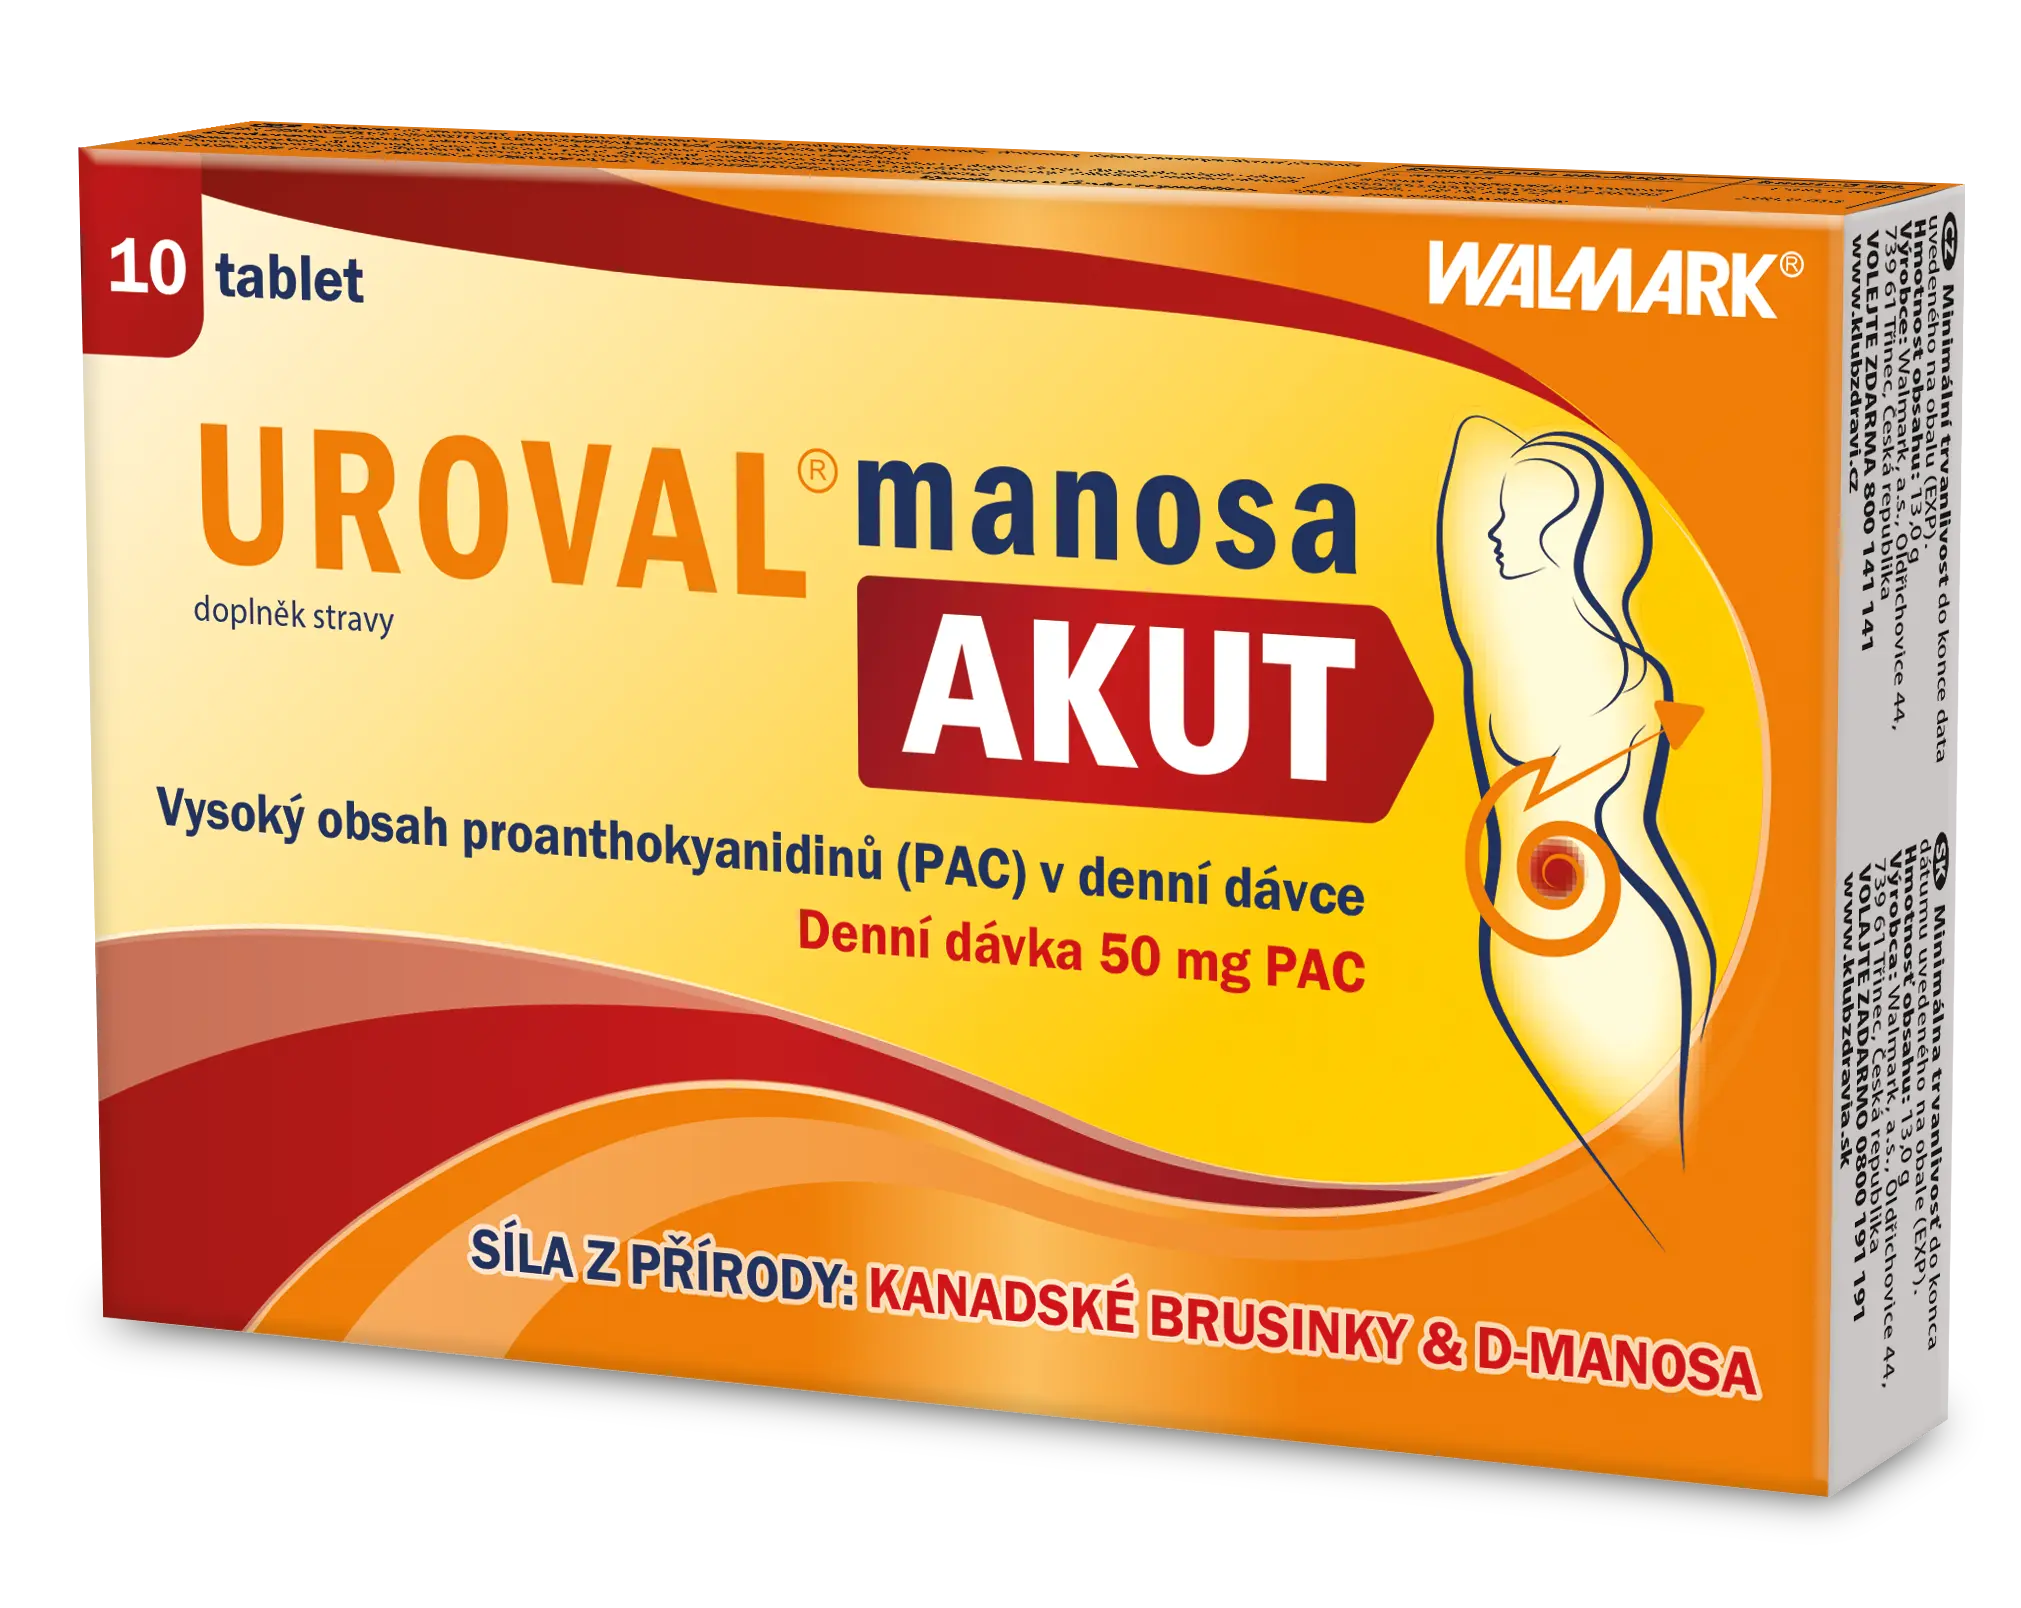 Walmark Uroval manosa Akut 10 tablet